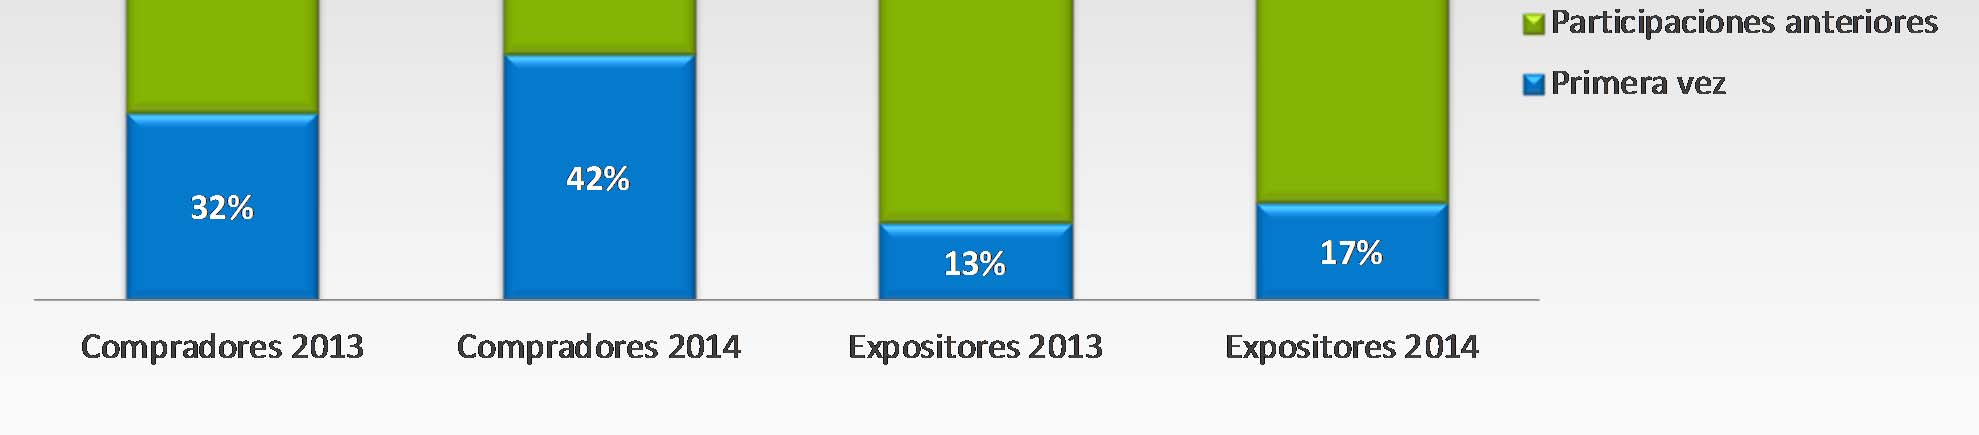 Presencia en Tianguis anteriores en promedio Compradores: 6.4 Expositores: 11.